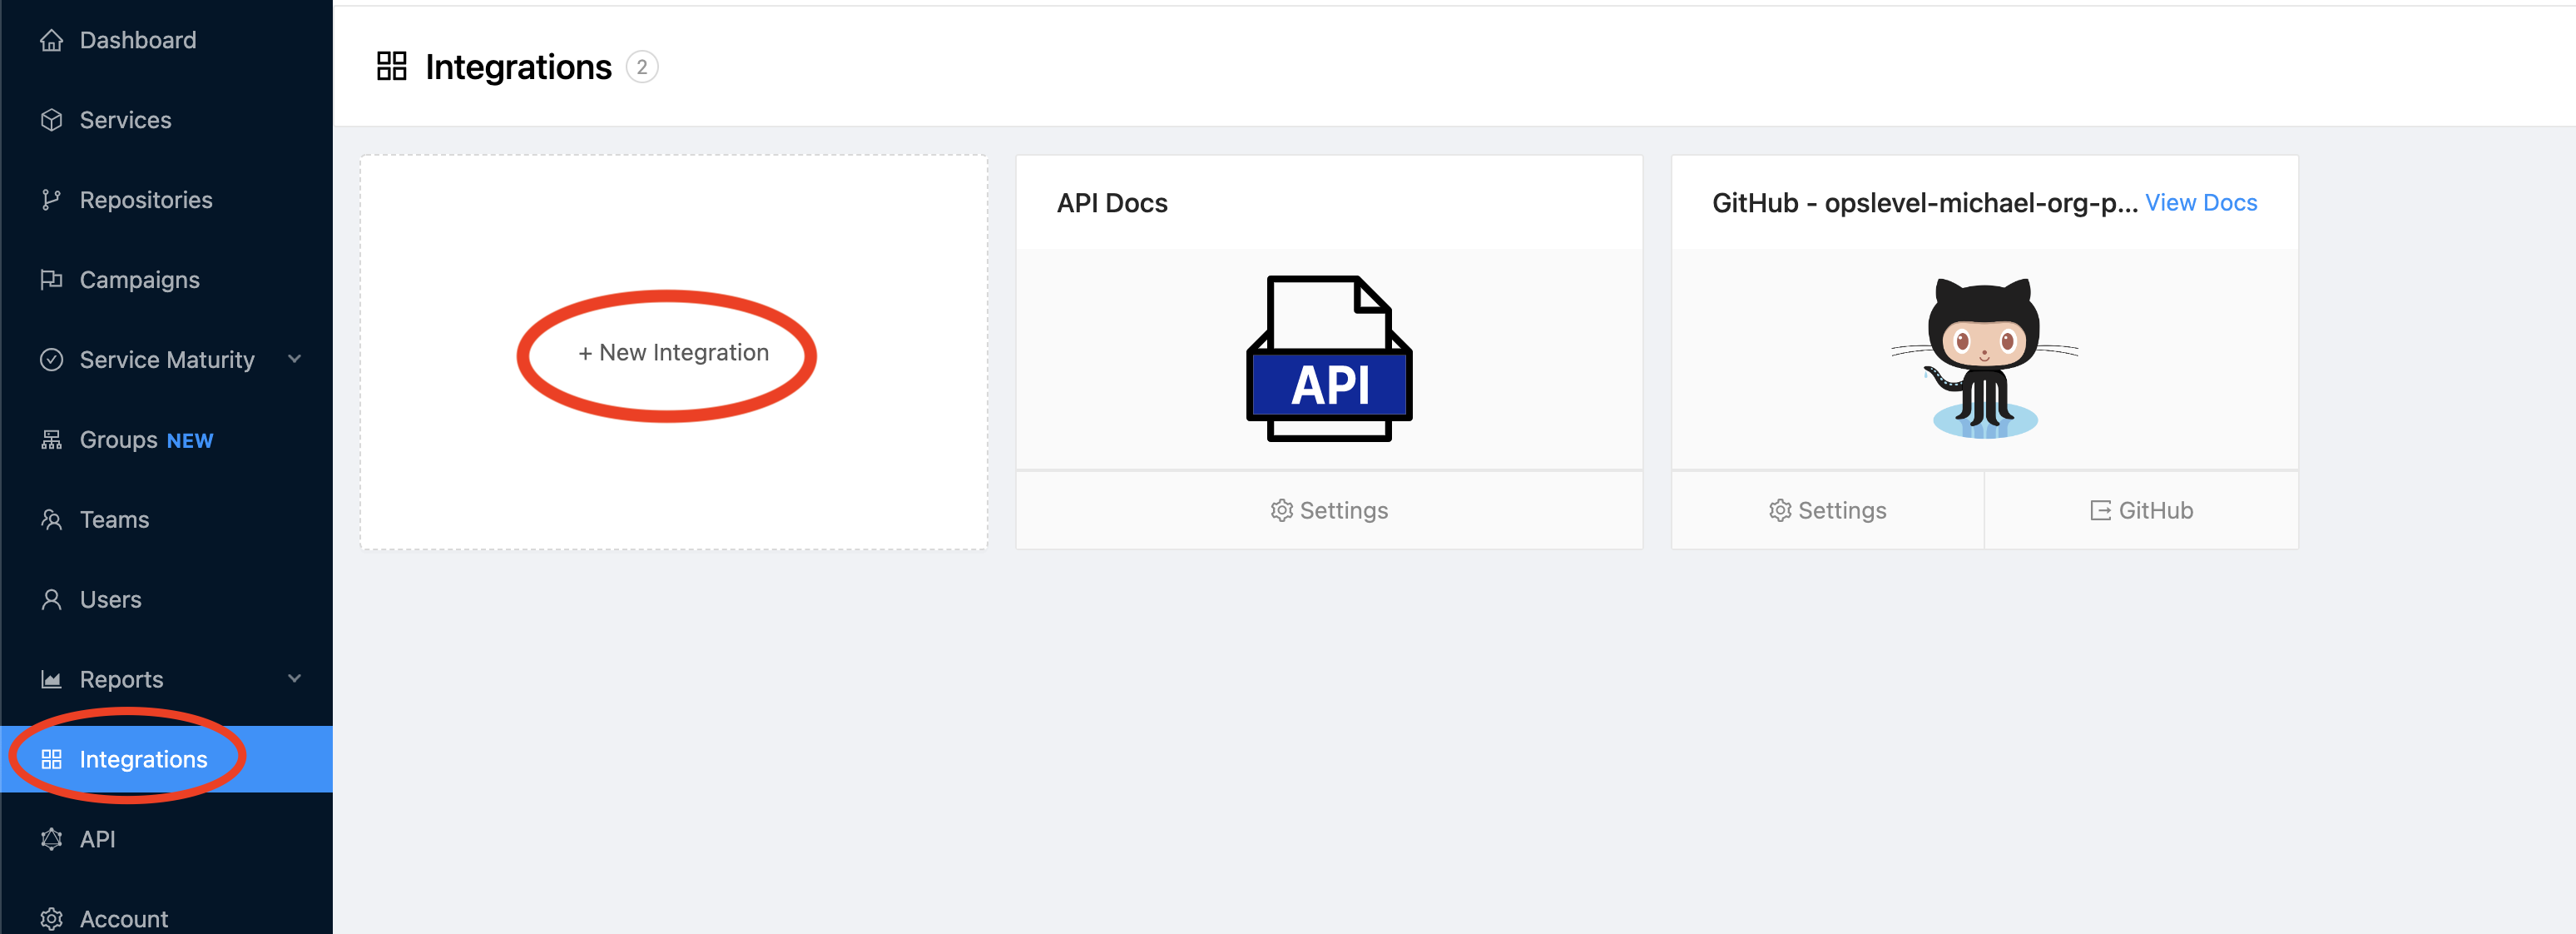 API Docs Integration Page